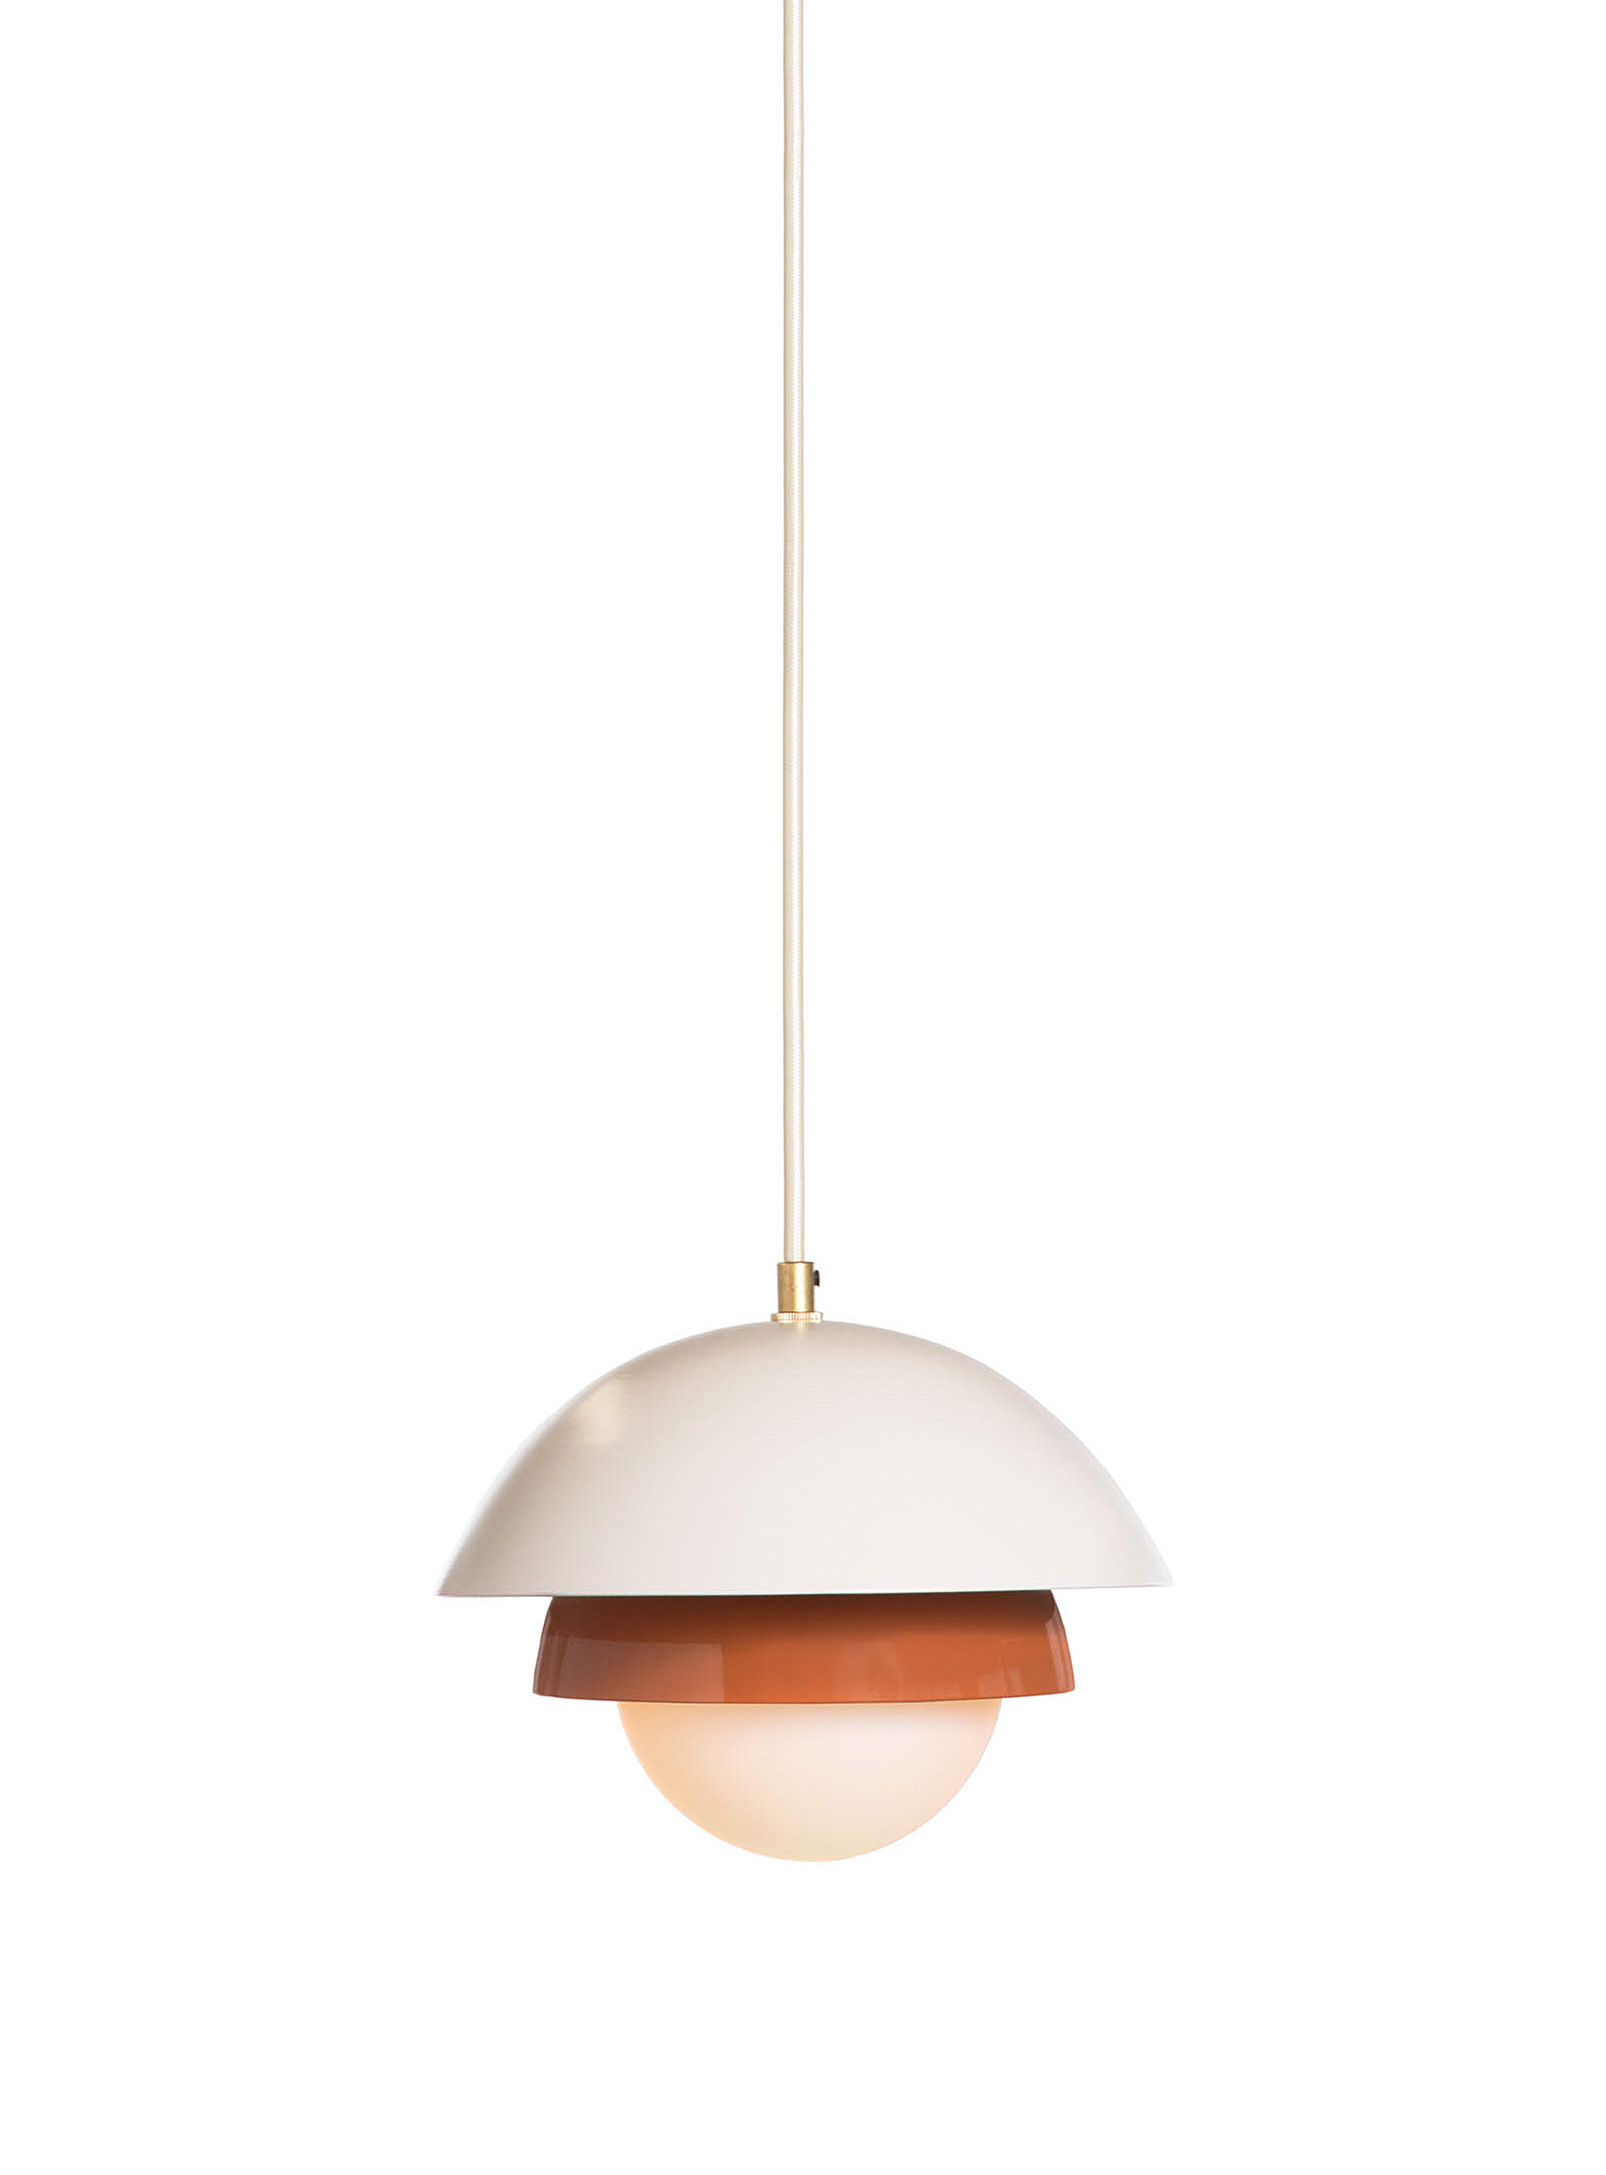 Luminaire Authentik Finlandaise Hanging Lamp In Patterned Orange